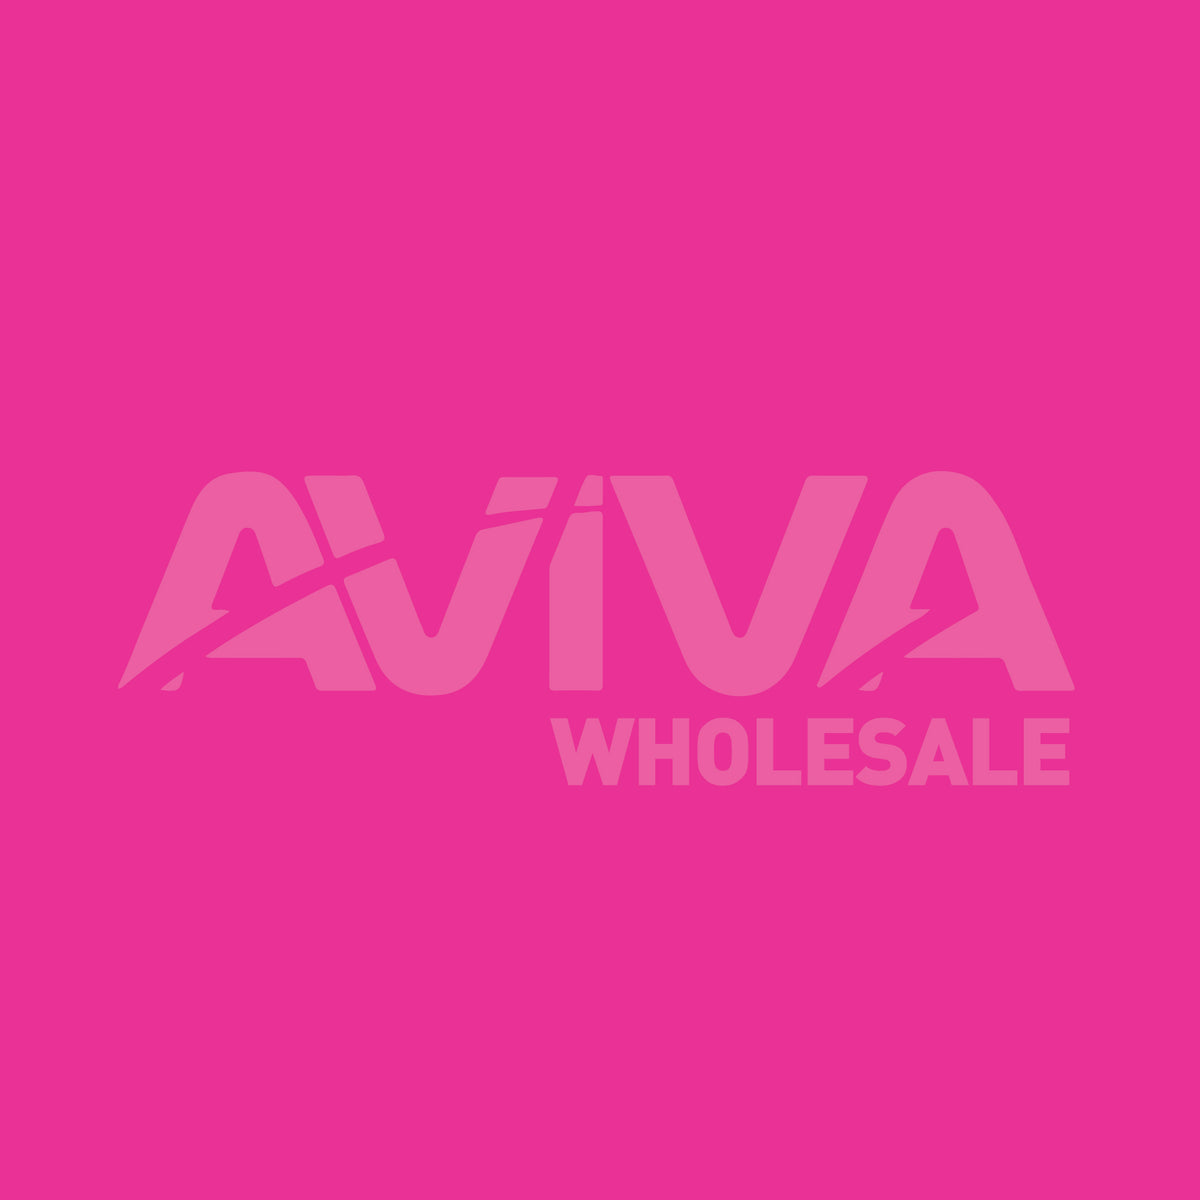 Plain Printable HTV Roll (54.5 Yard) – Aviva Wholesale